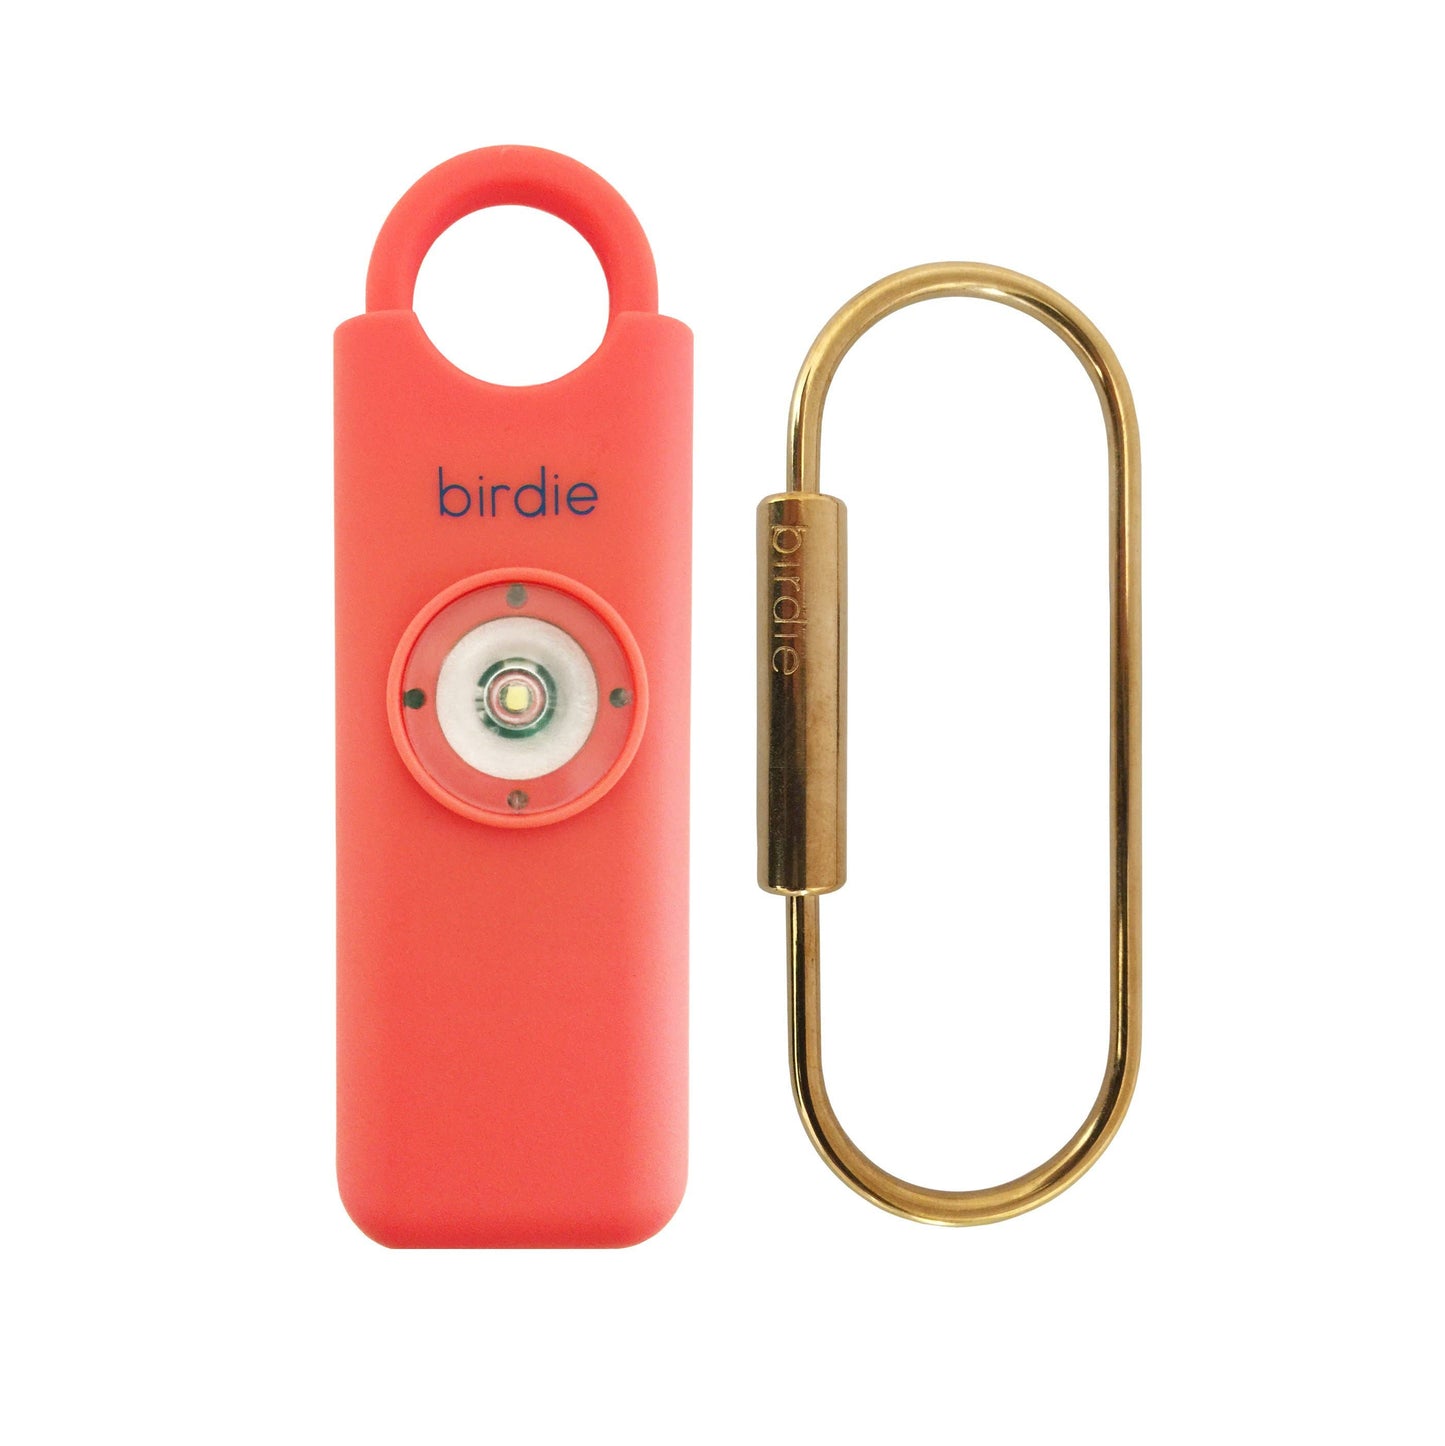 She's Birdie Personal Safety Alarm: Single / Cheetah